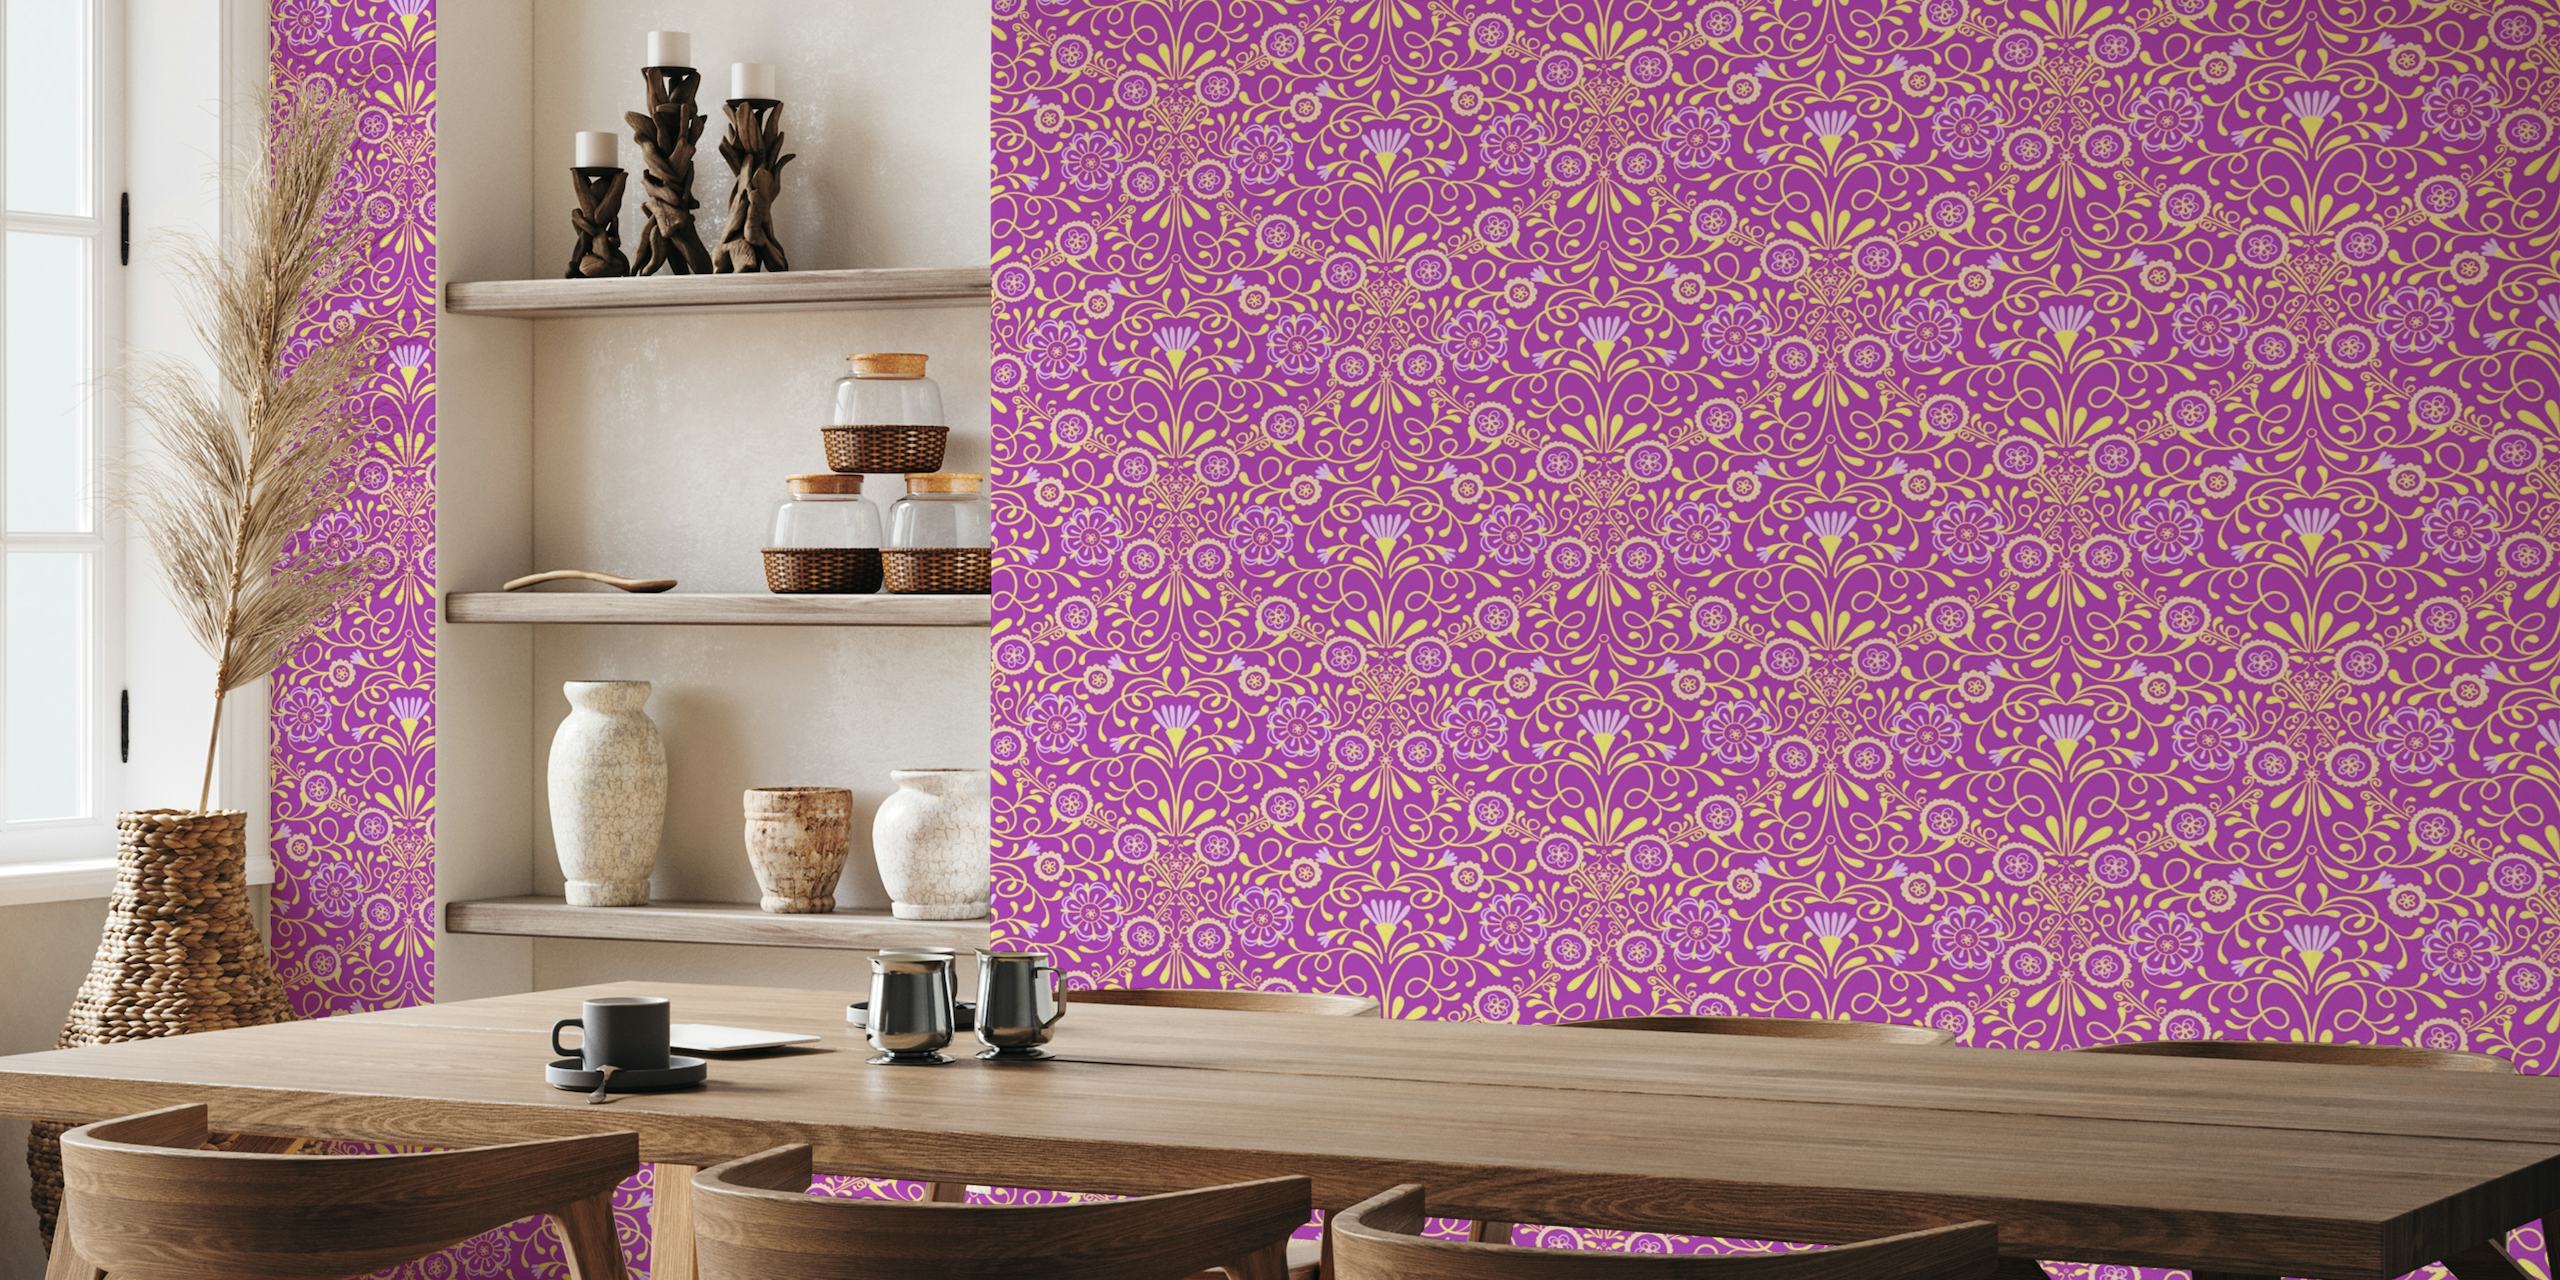 Tuscan Tile in Magenta, Yellow, and Purple papel pintado